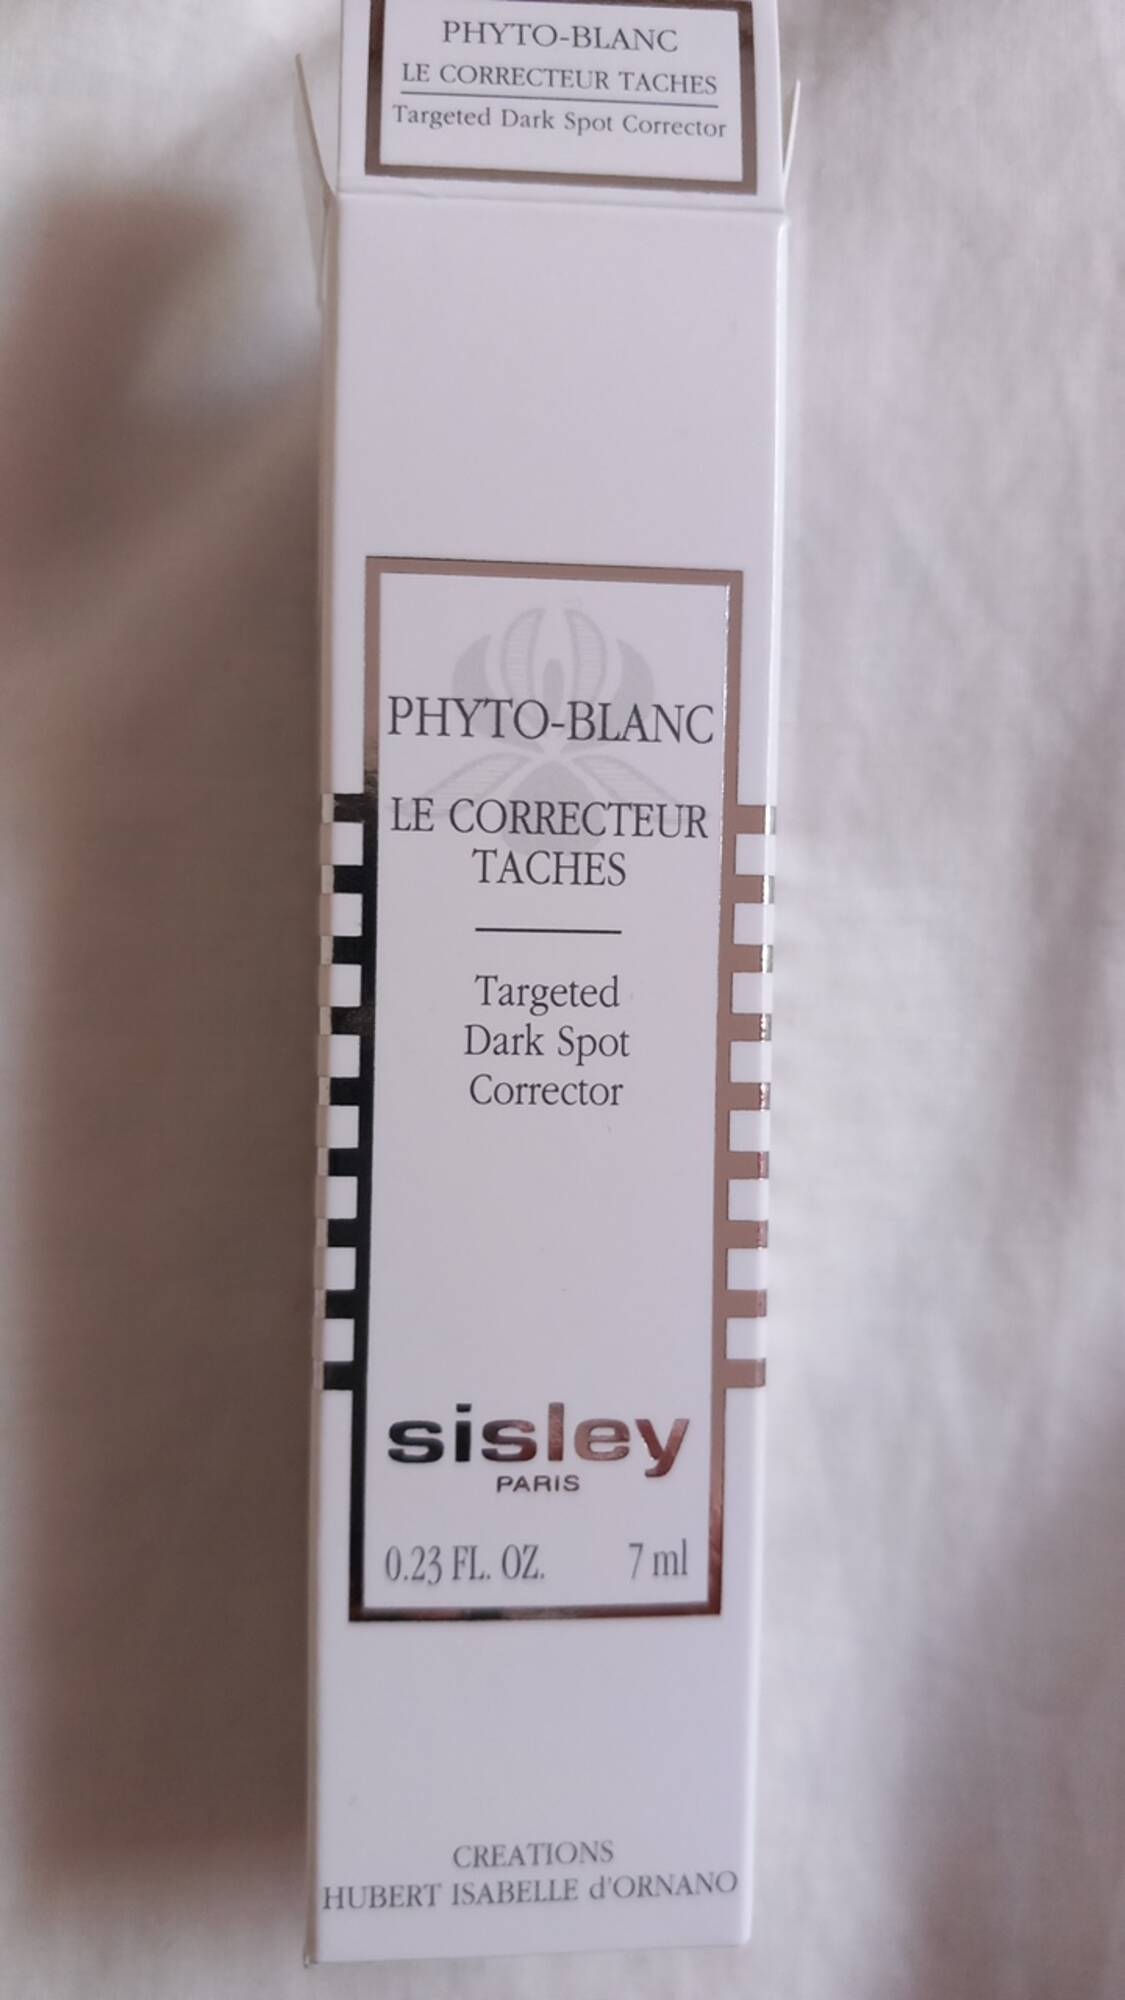 SISLEY - Phyto-blanc - Le correcteur tâches